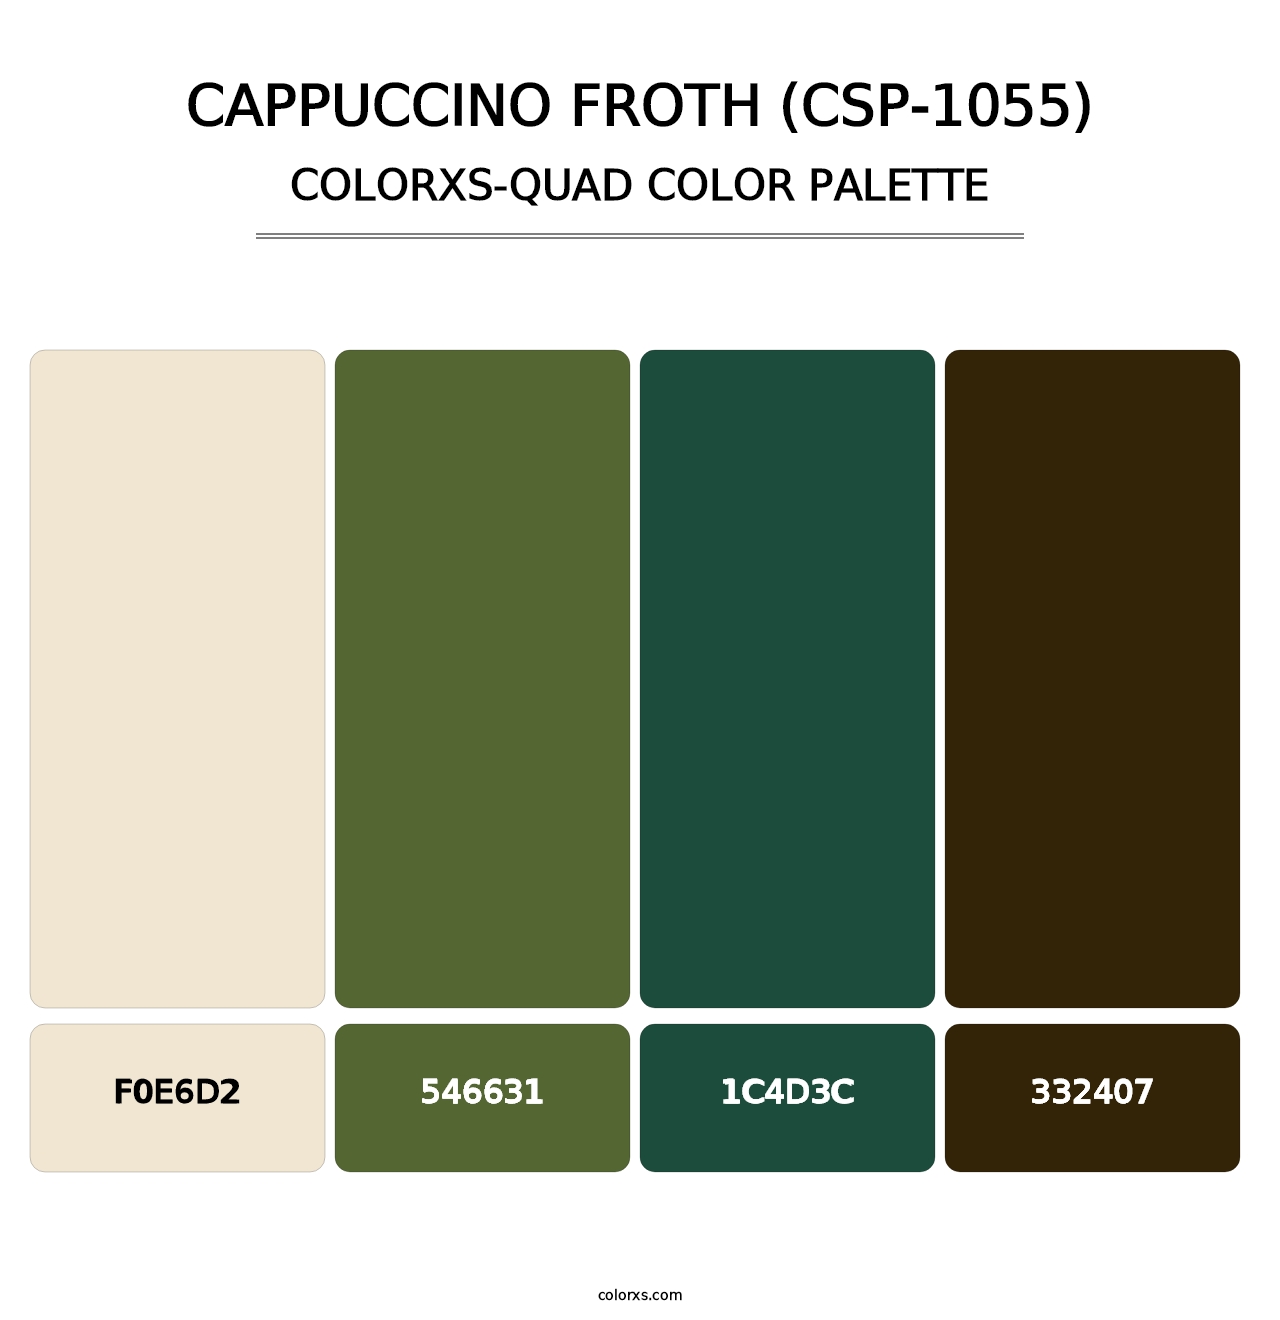 Cappuccino Froth (CSP-1055) - Colorxs Quad Palette